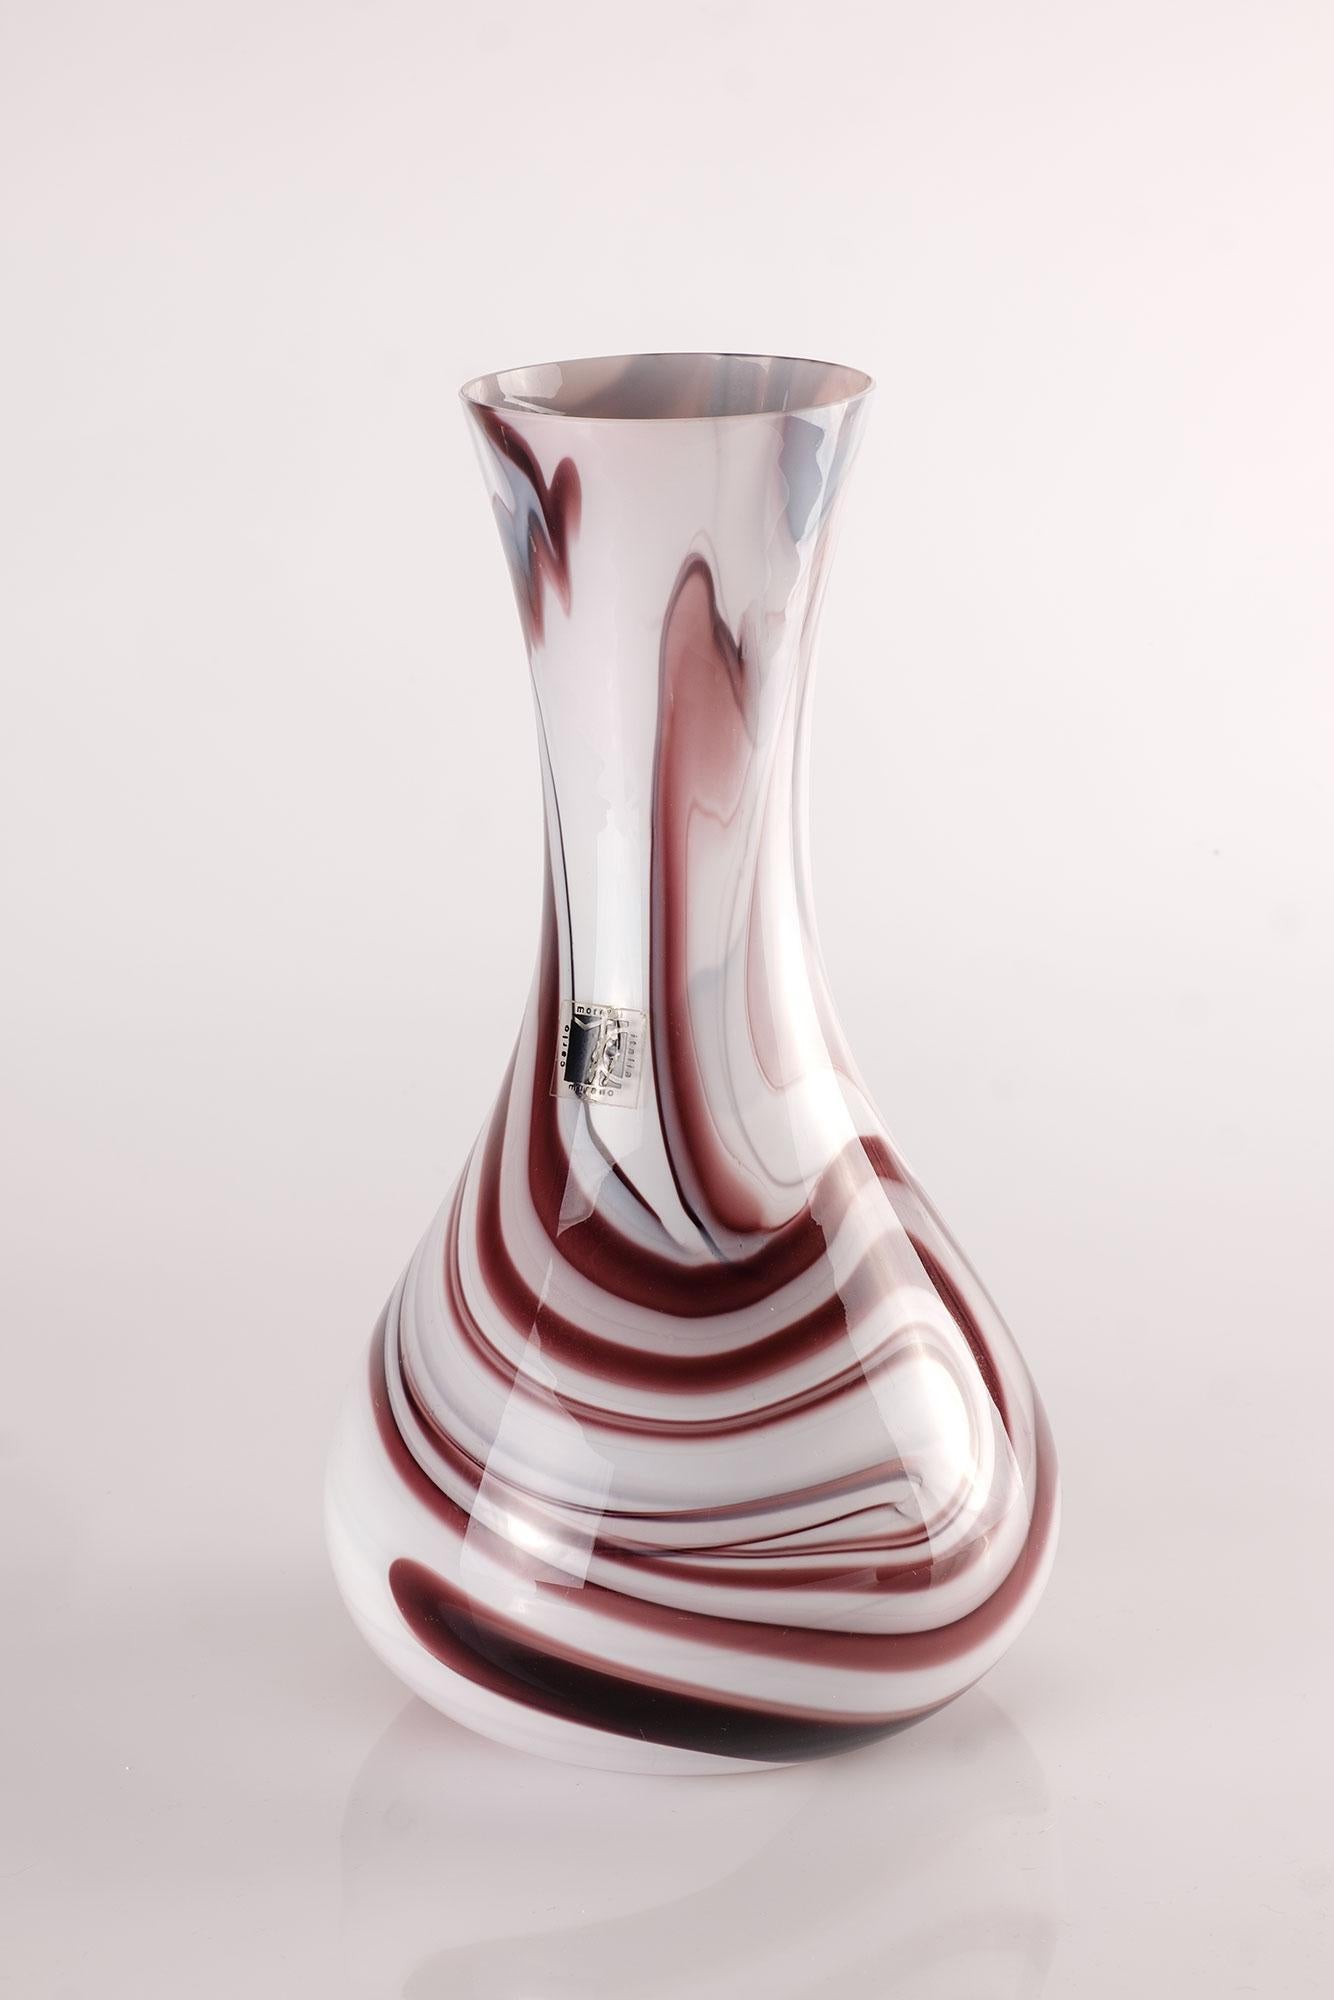 Splendid large Murano Glass vase from Carlo Moretti crafted in the 1980s.
Beautiful design in purple and white.
Original label.